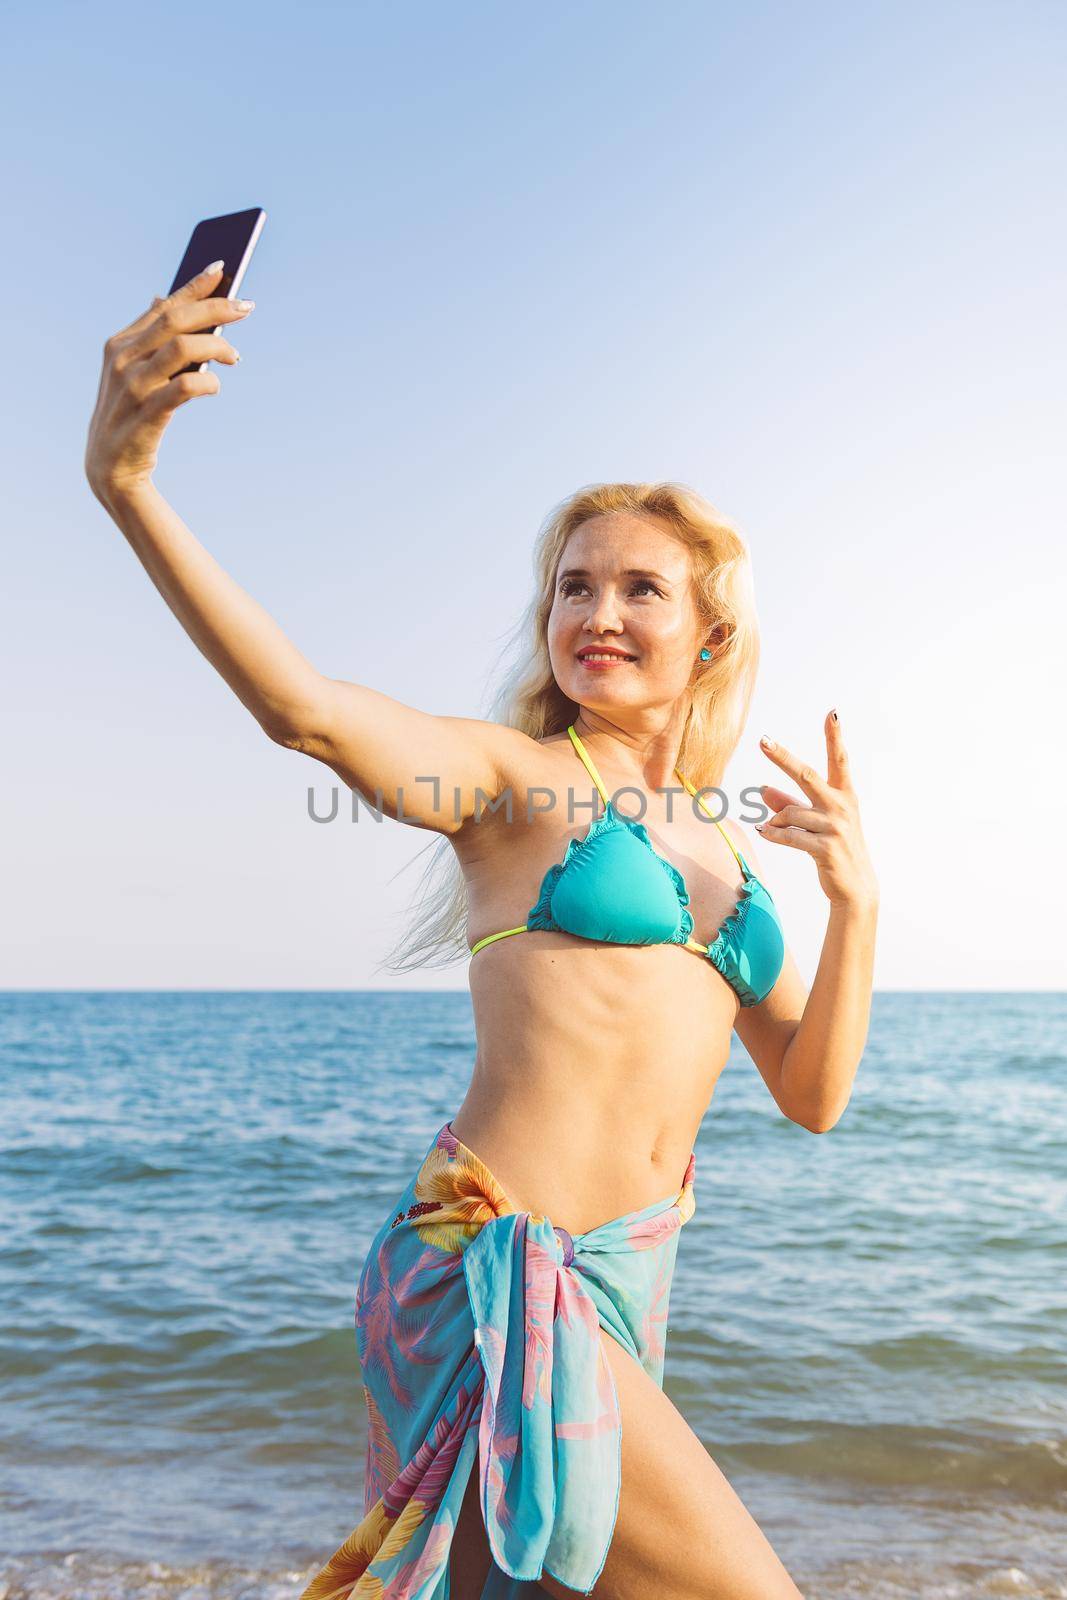 vertical photo of a woman taking a selfie at beach by raulmelldo